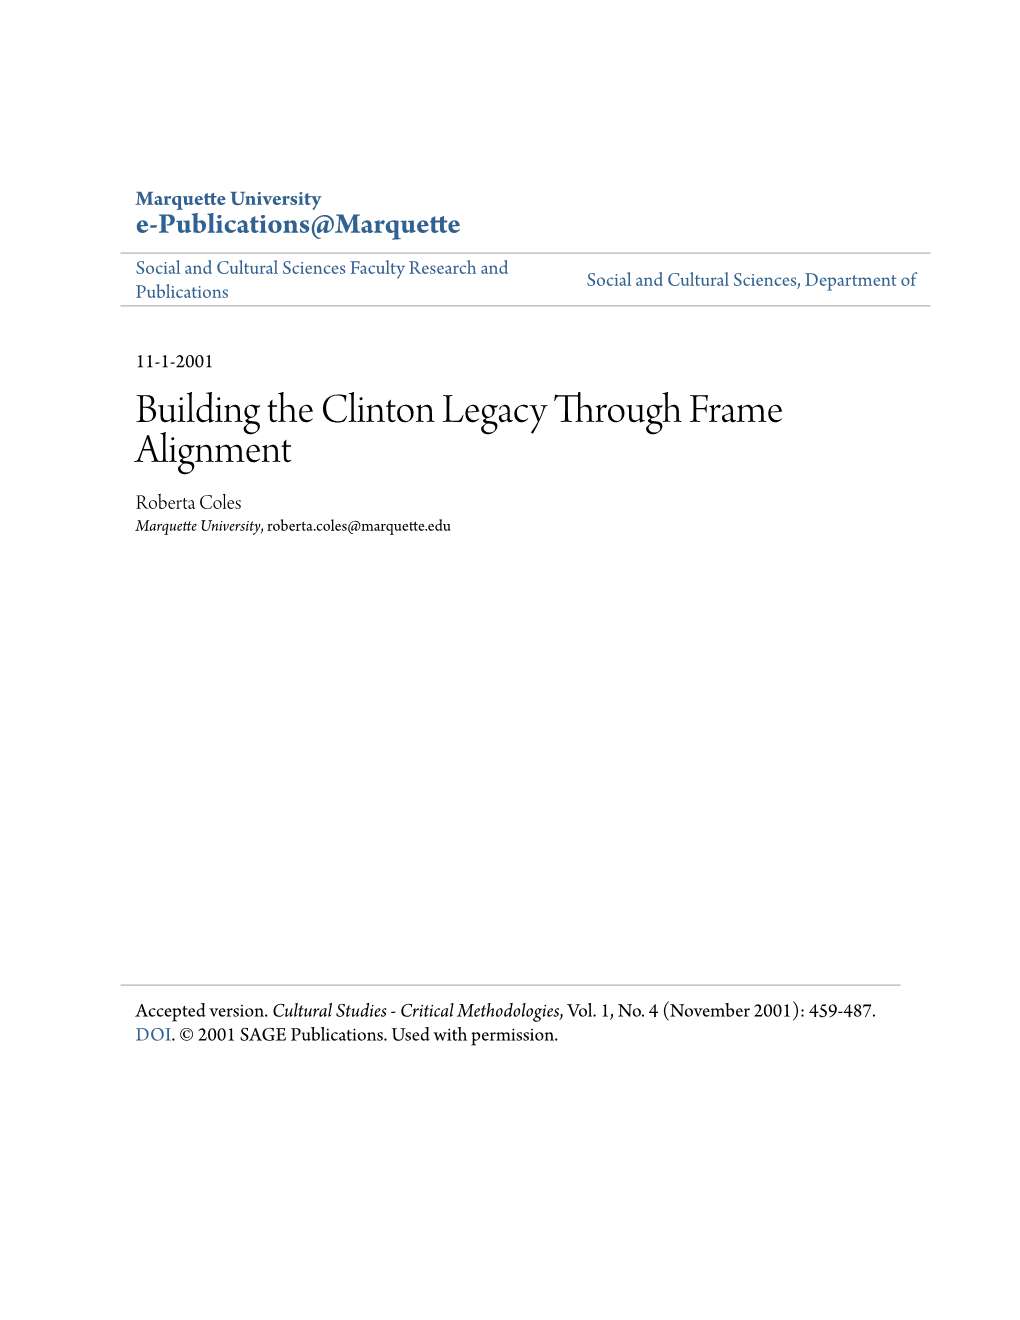 Building the Clinton Legacy Through Frame Alignment Roberta Coles Marquette University, Roberta.Coles@Marquette.Edu